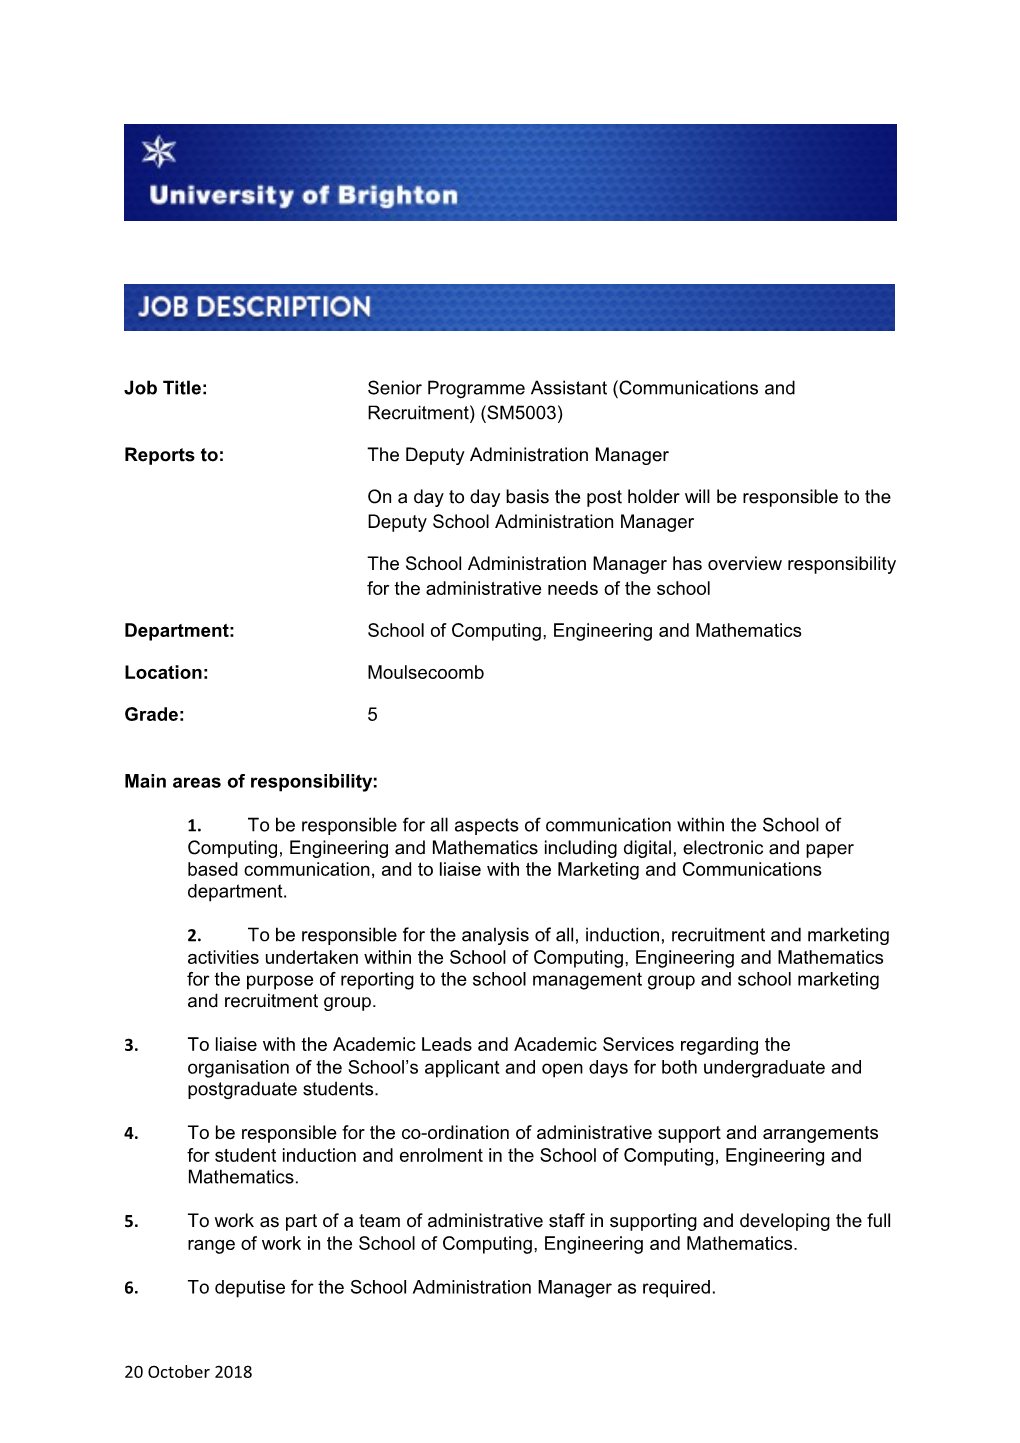 Job Title:Senior Programme Assistant (Communications and Recruitment) (SM5003)